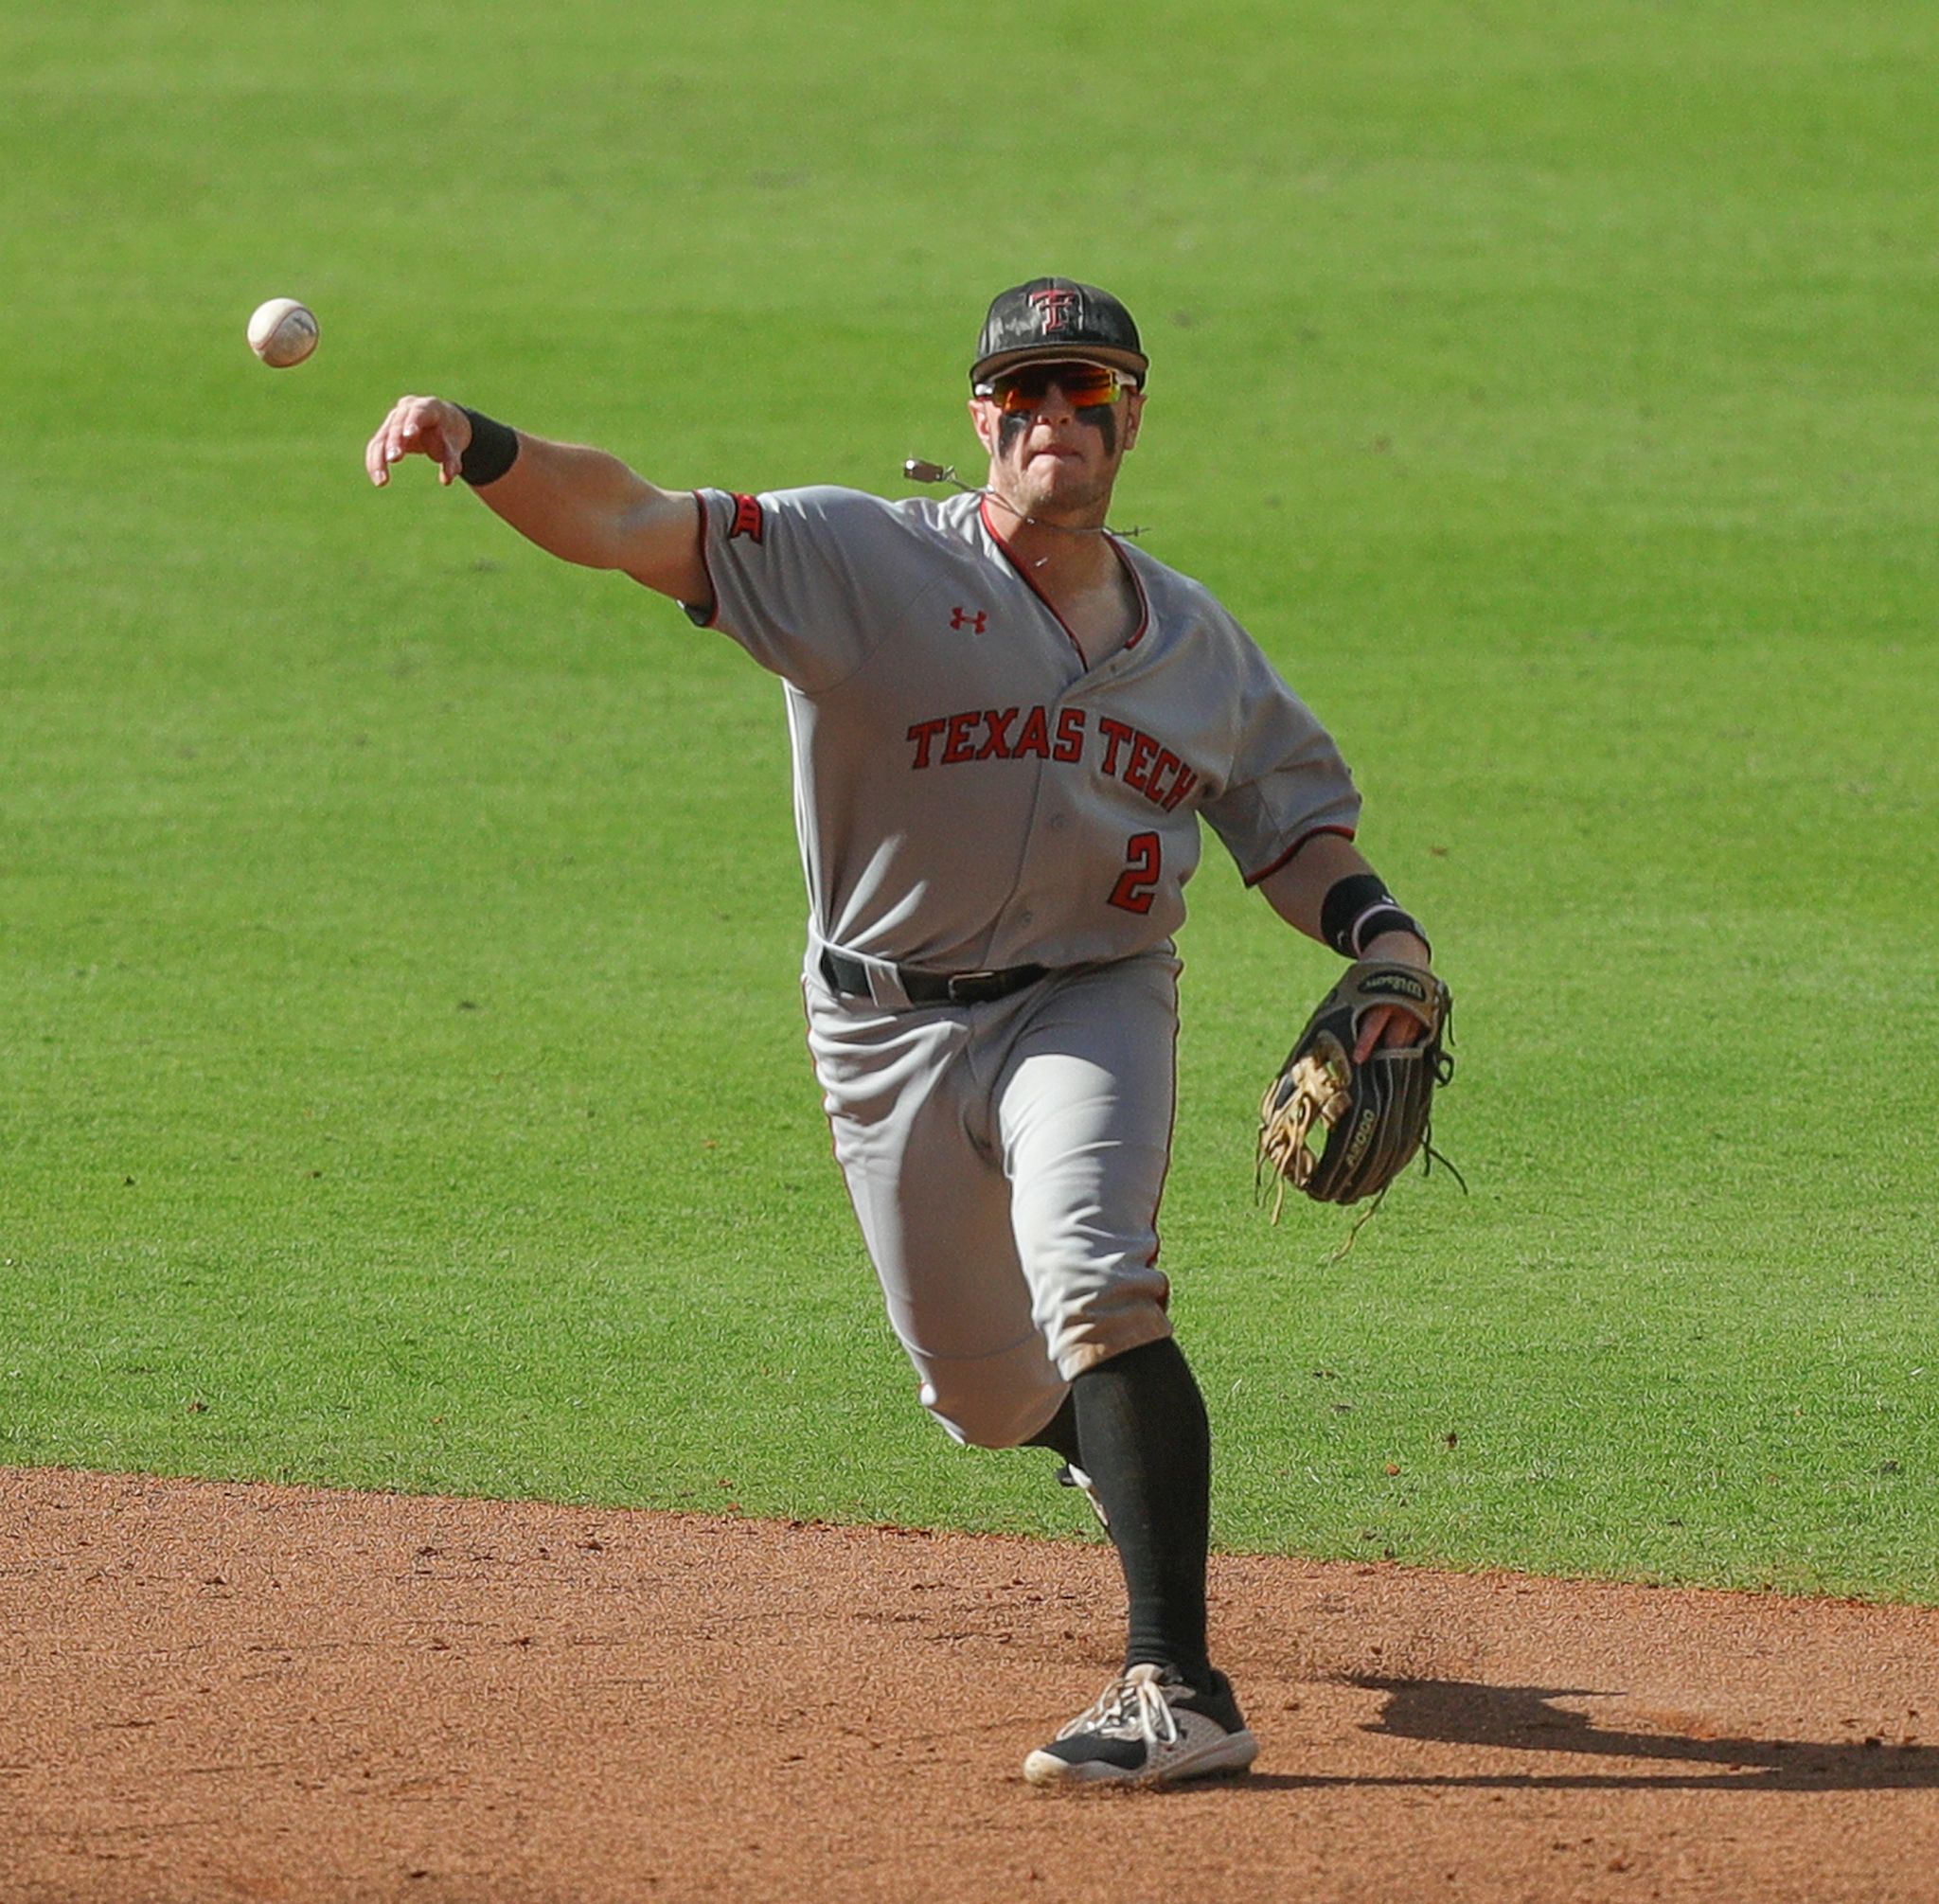 Top 25 Returning Big 12 Baseball Players, No. 1: Josh Hung, Texas Tech IF